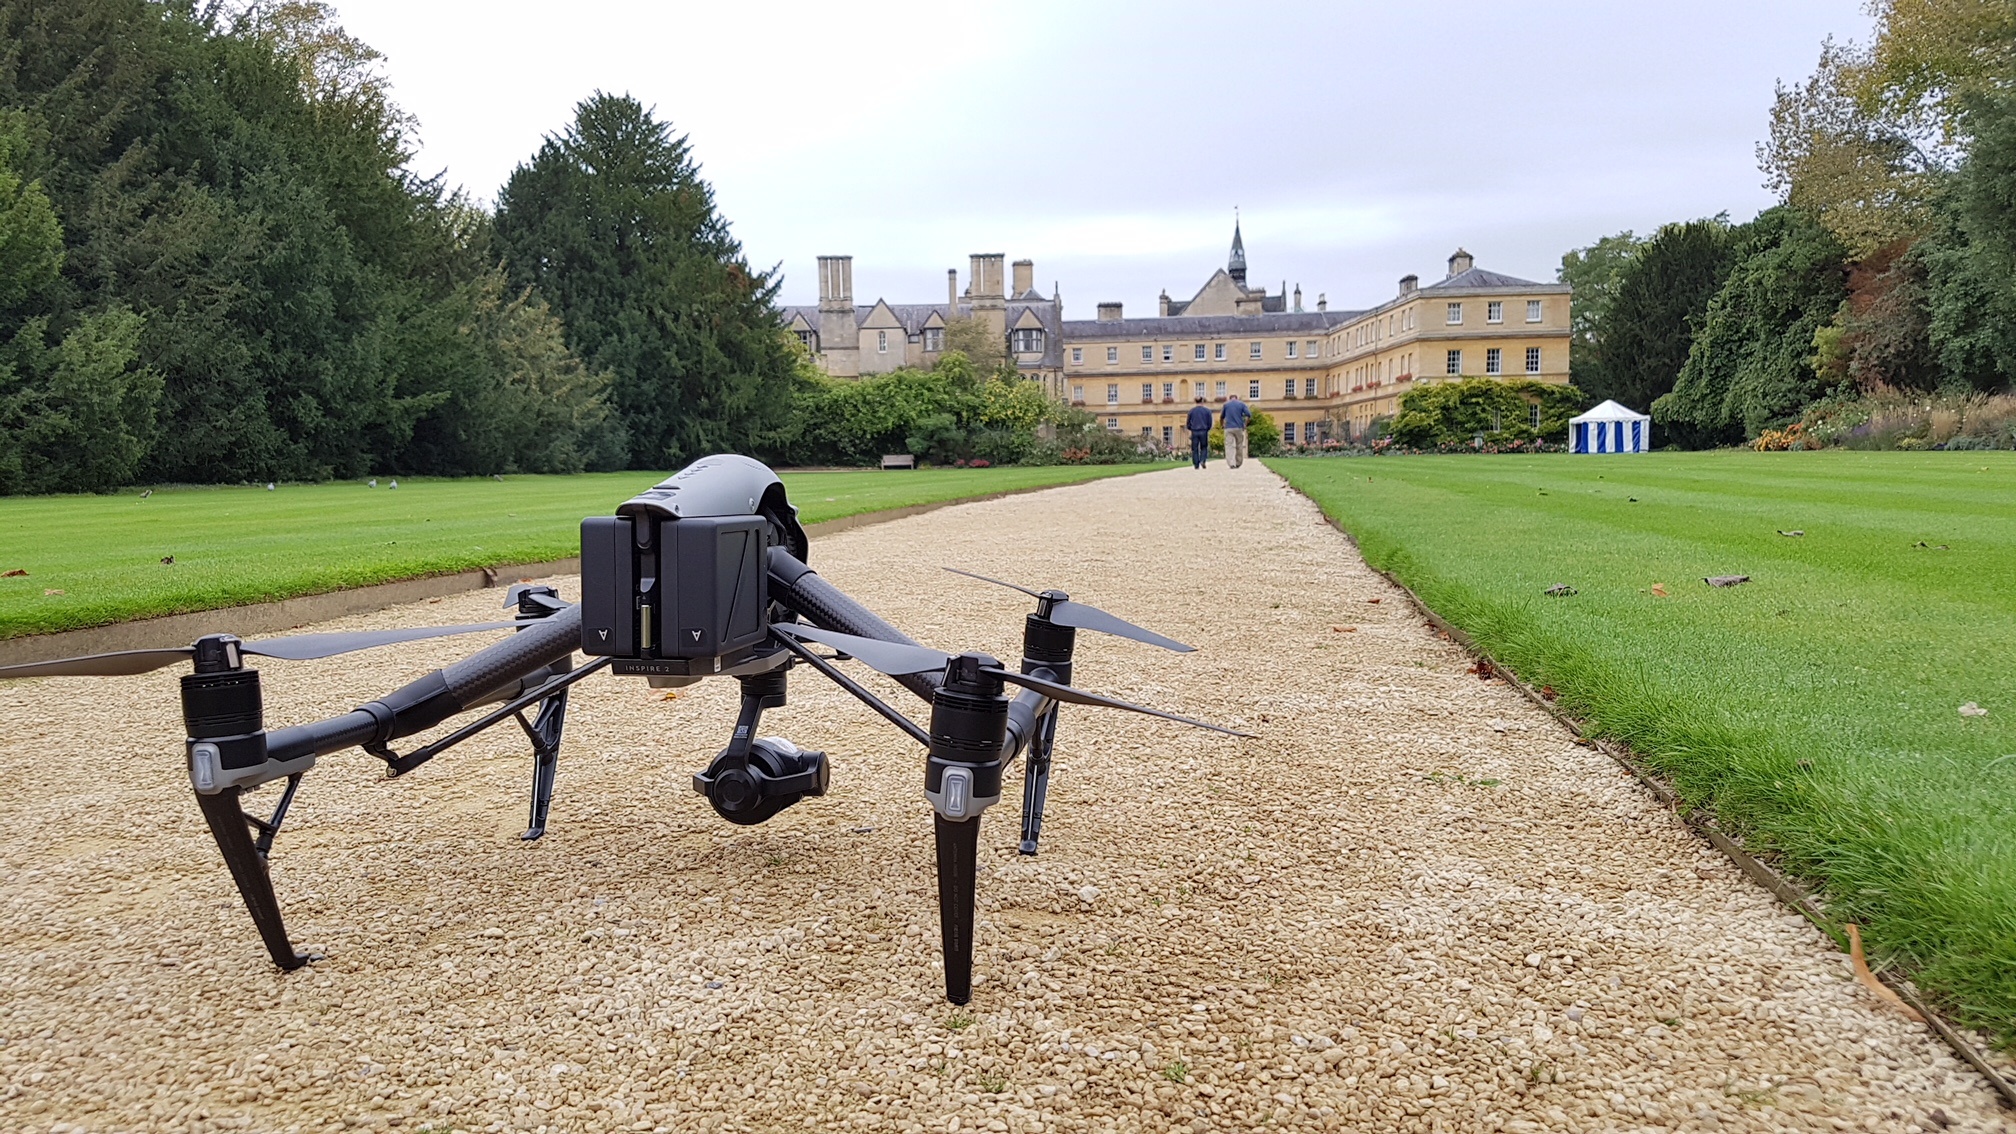 DJI Inspire 2 Drone at Oxford University